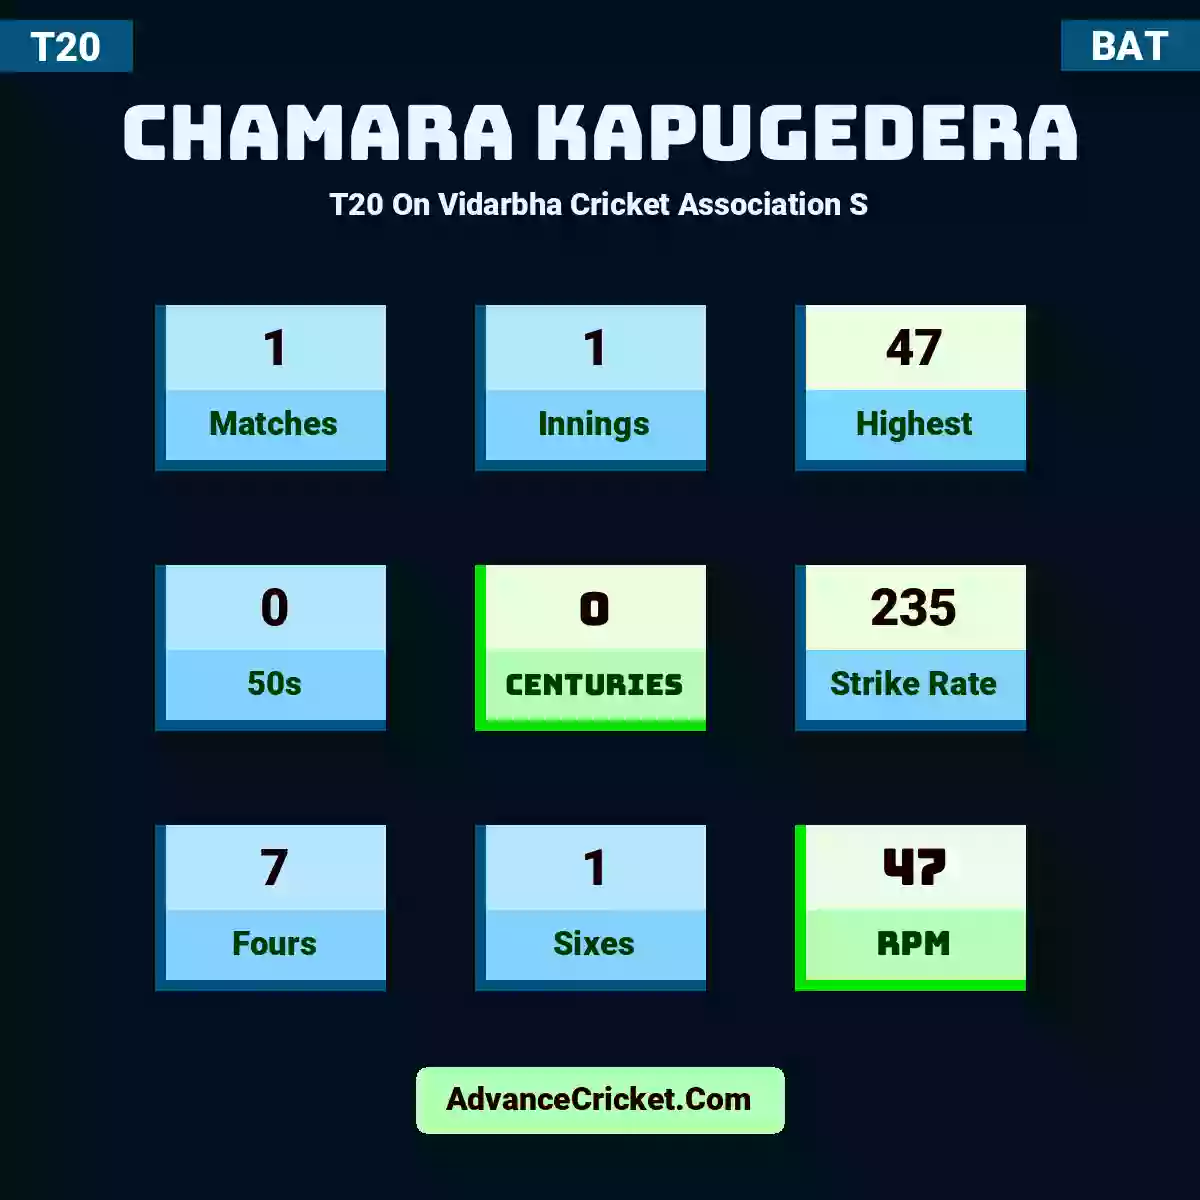 Chamara Kapugedera T20  On Vidarbha Cricket Association S, Chamara Kapugedera played 1 matches, scored 47 runs as highest, 0 half-centuries, and 0 centuries, with a strike rate of 235. C.Kapugedera hit 7 fours and 1 sixes, with an RPM of 47.